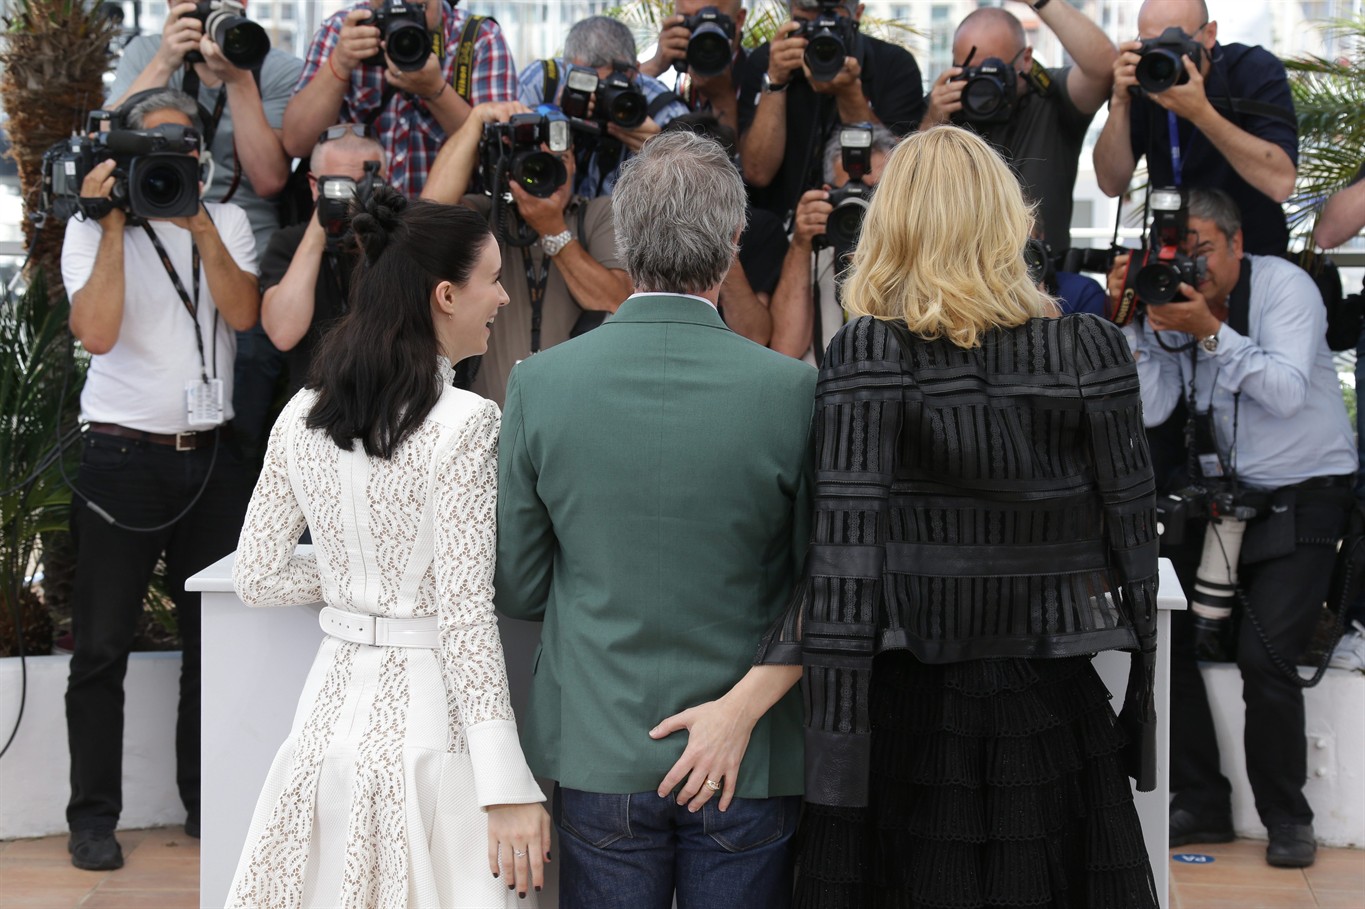 Carol's Rooney Mara, Cate Blanchett on path to SAG glory 